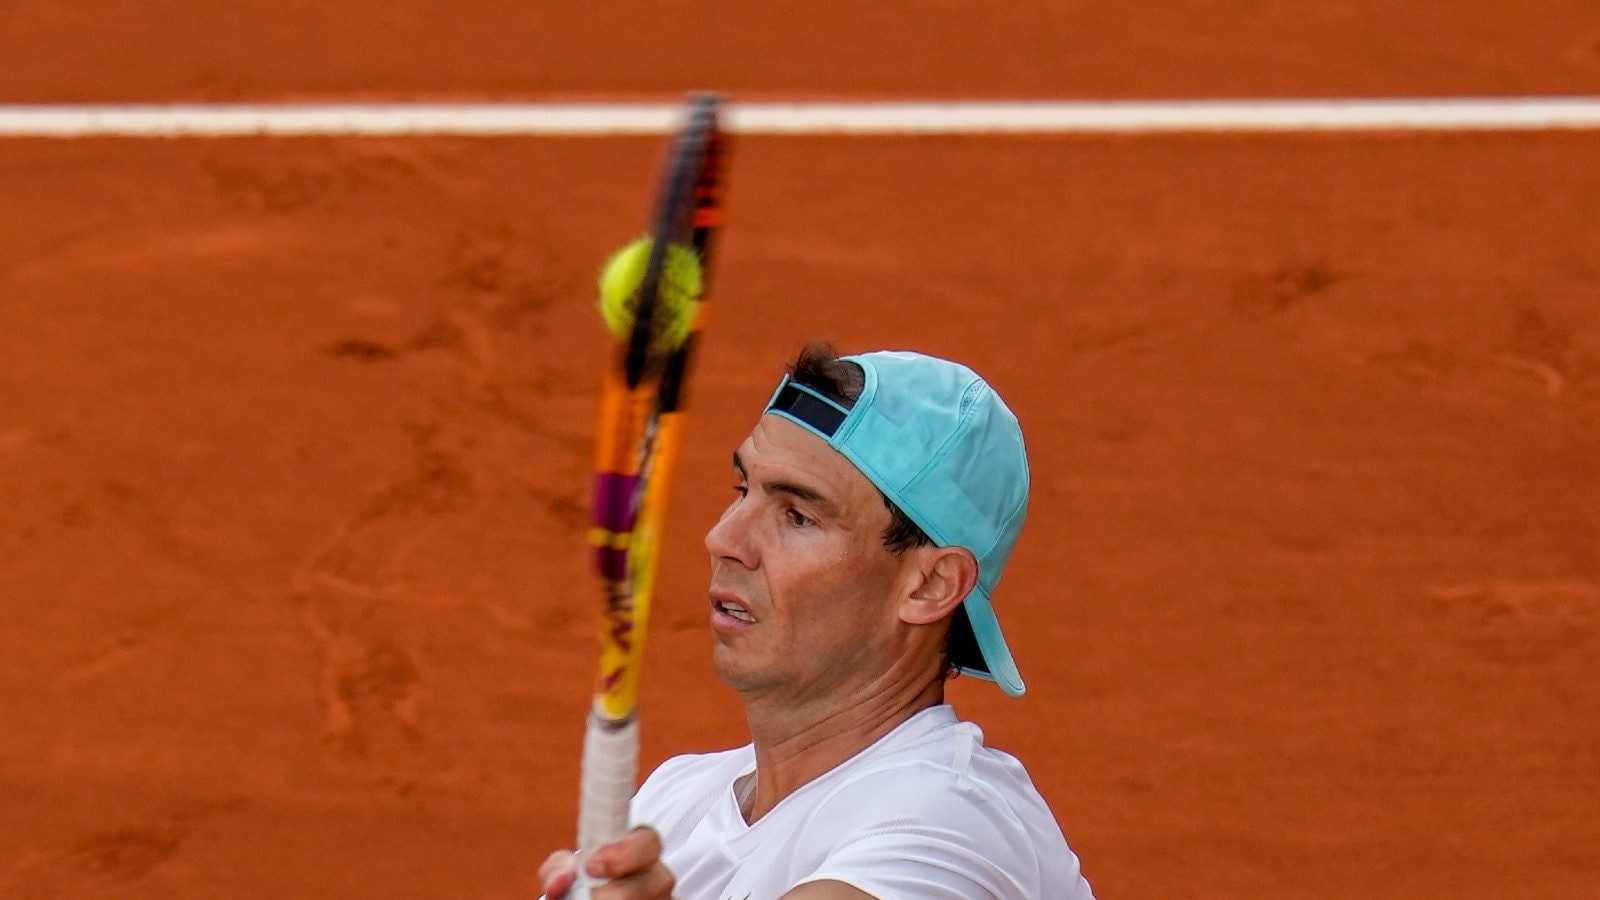 Madrid Open Rafael Nadal Returns